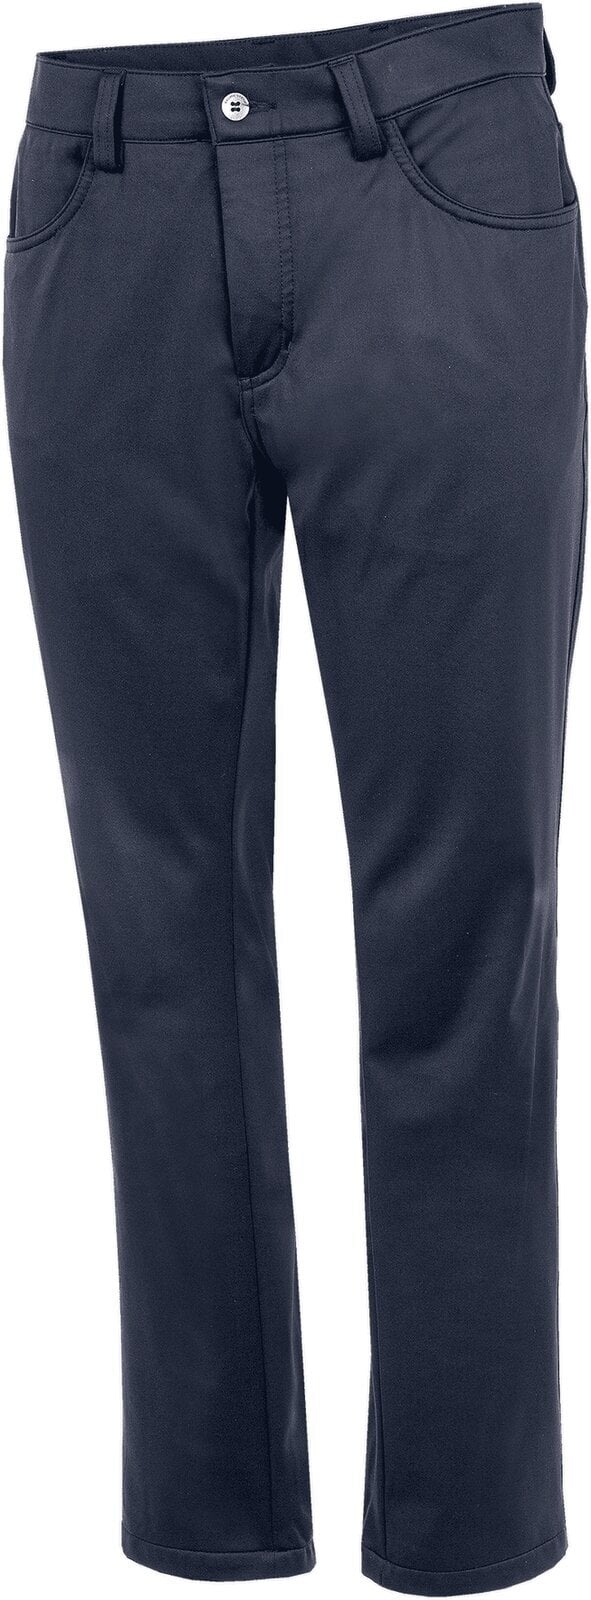 Pantalons Galvin Green Lane MensWindproof And Water Repellent Pants Navy 34/32